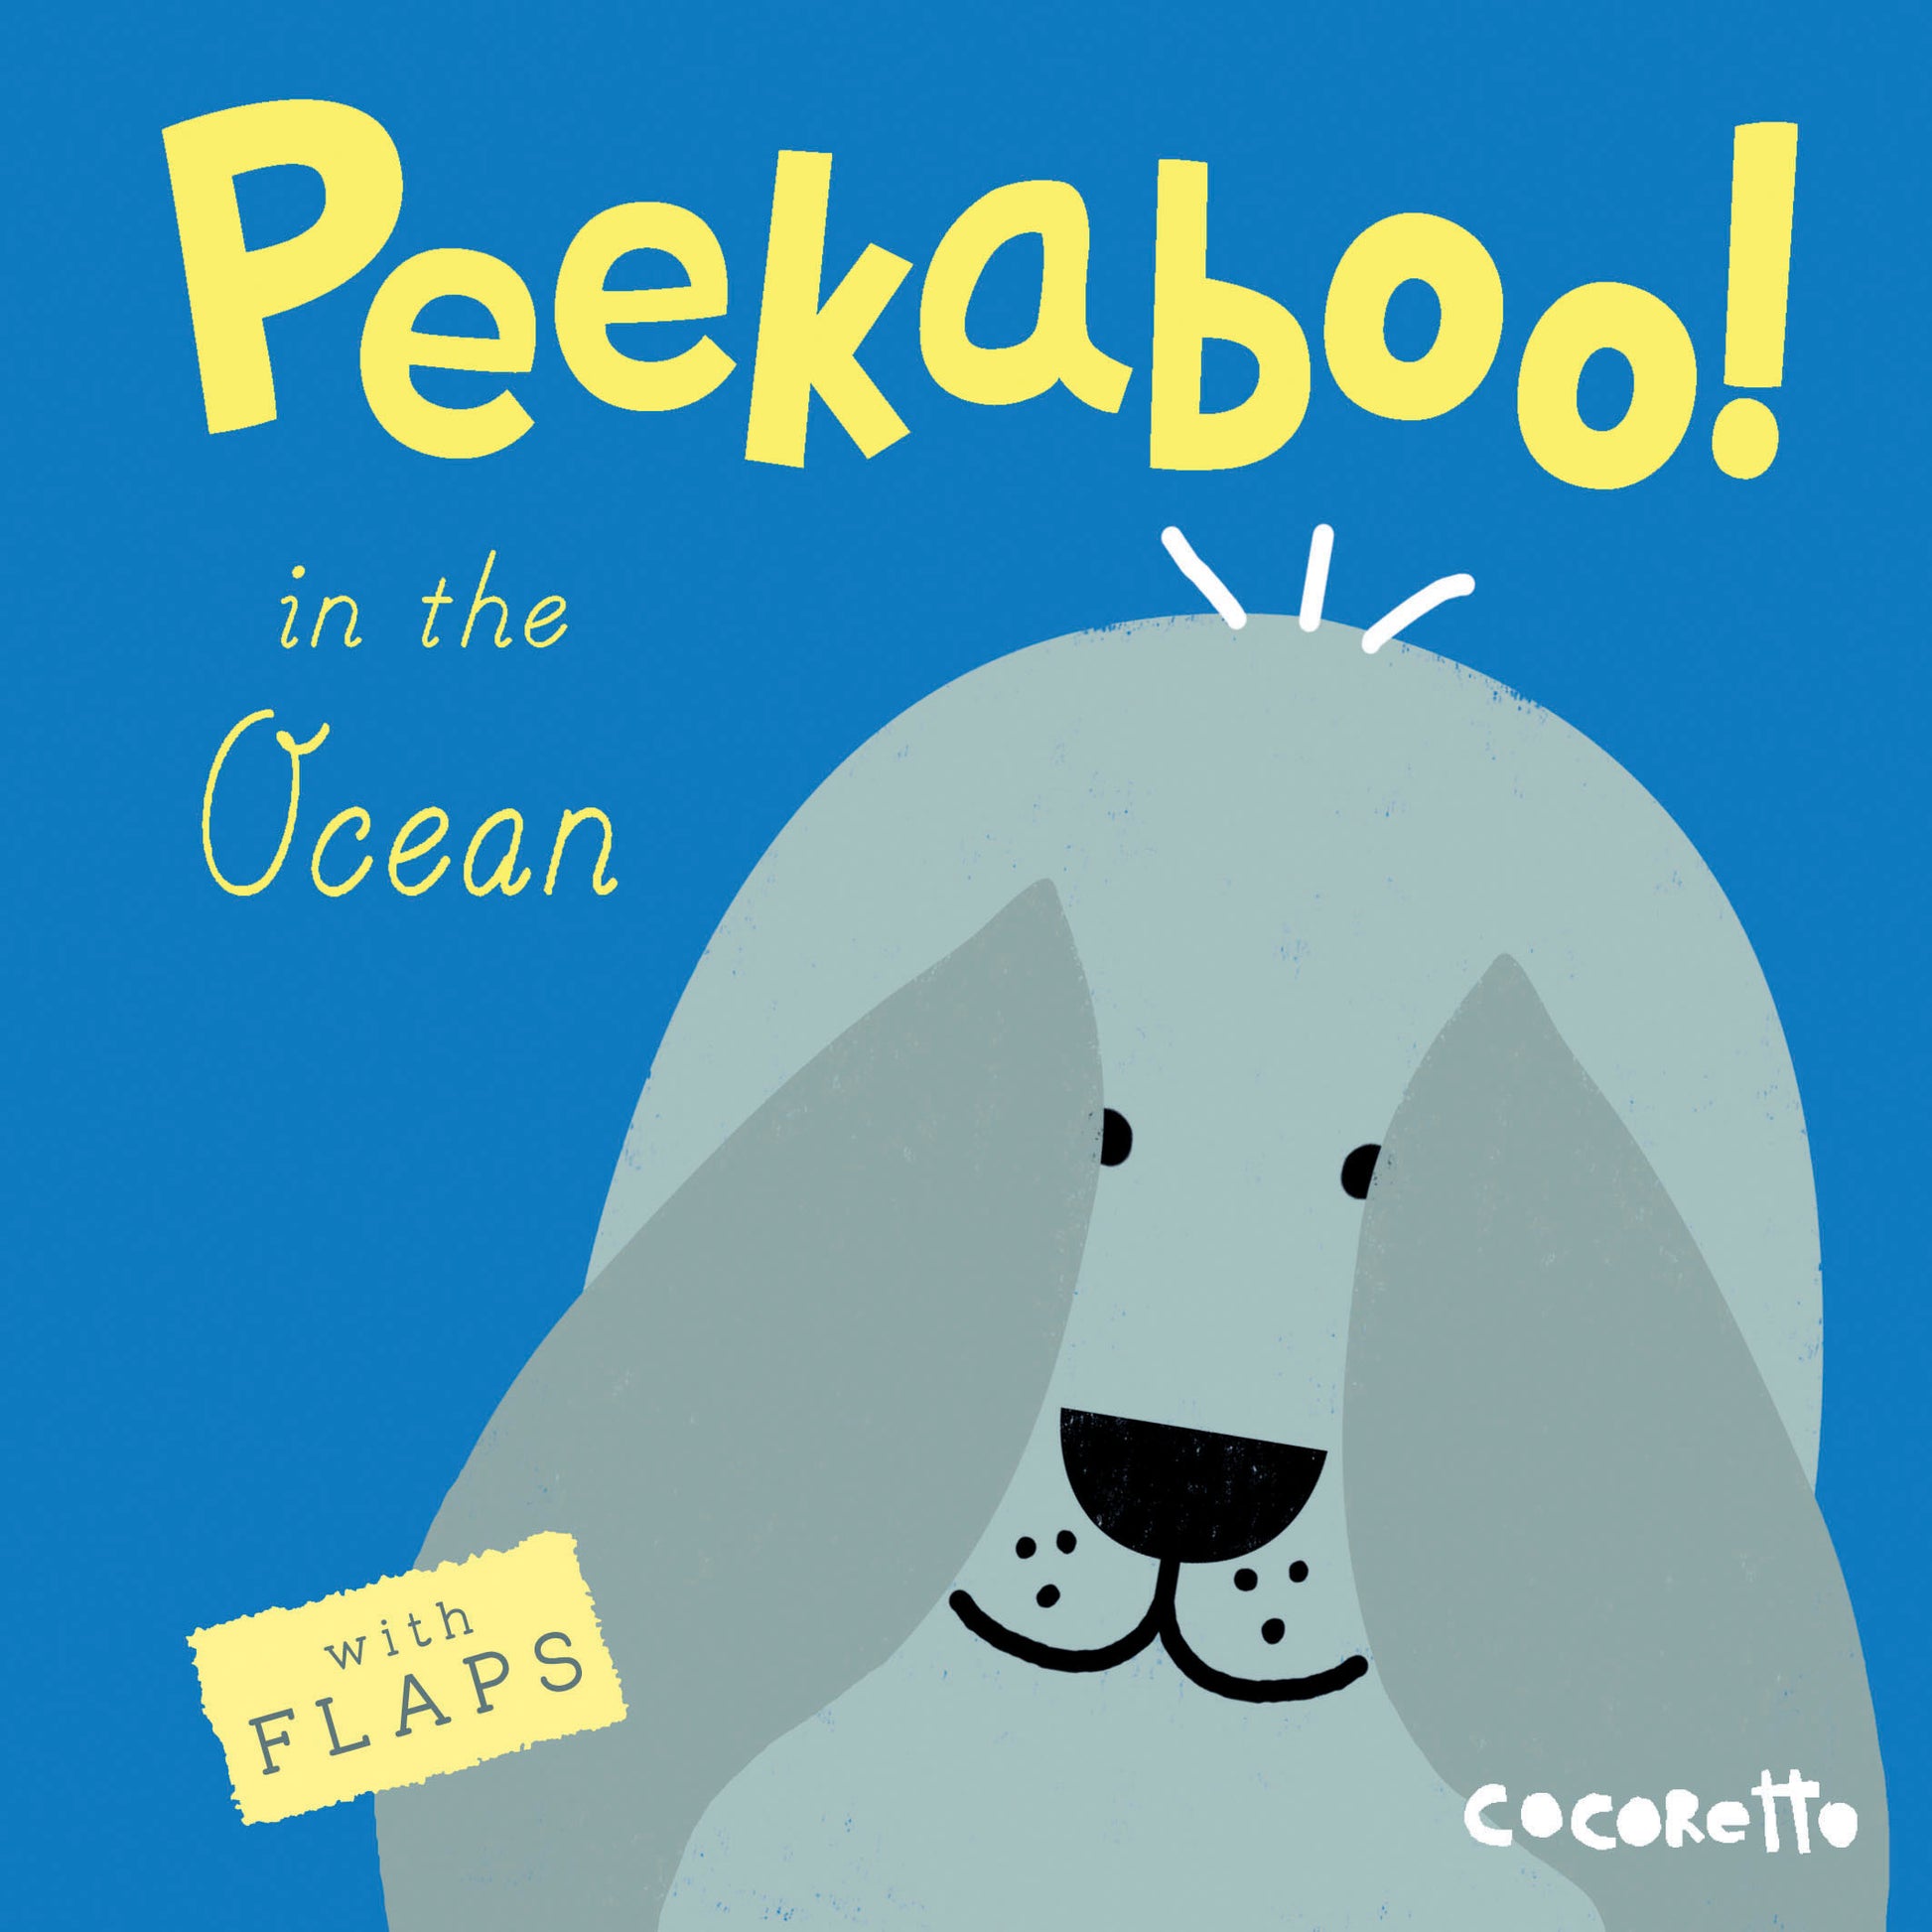 Peekaboo! In the Ocean!